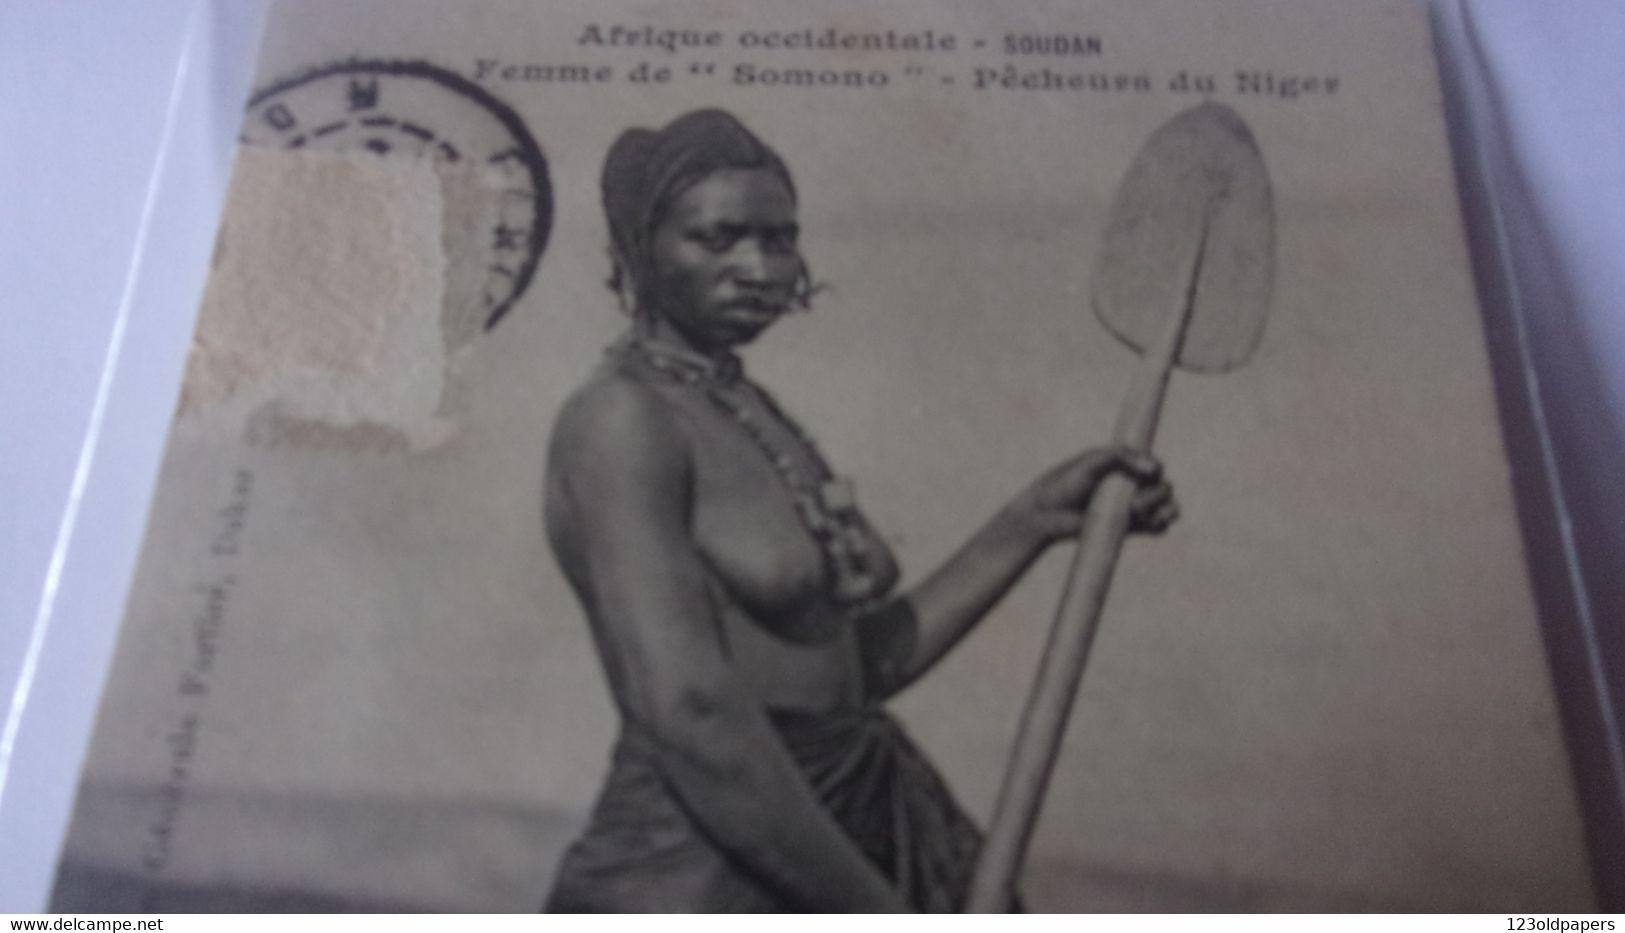 ♥️ FEMME SEINS NUS VOYAGEE SOUDAN FEMME DE SOMONO PECHEURS DU NIGER - Soedan